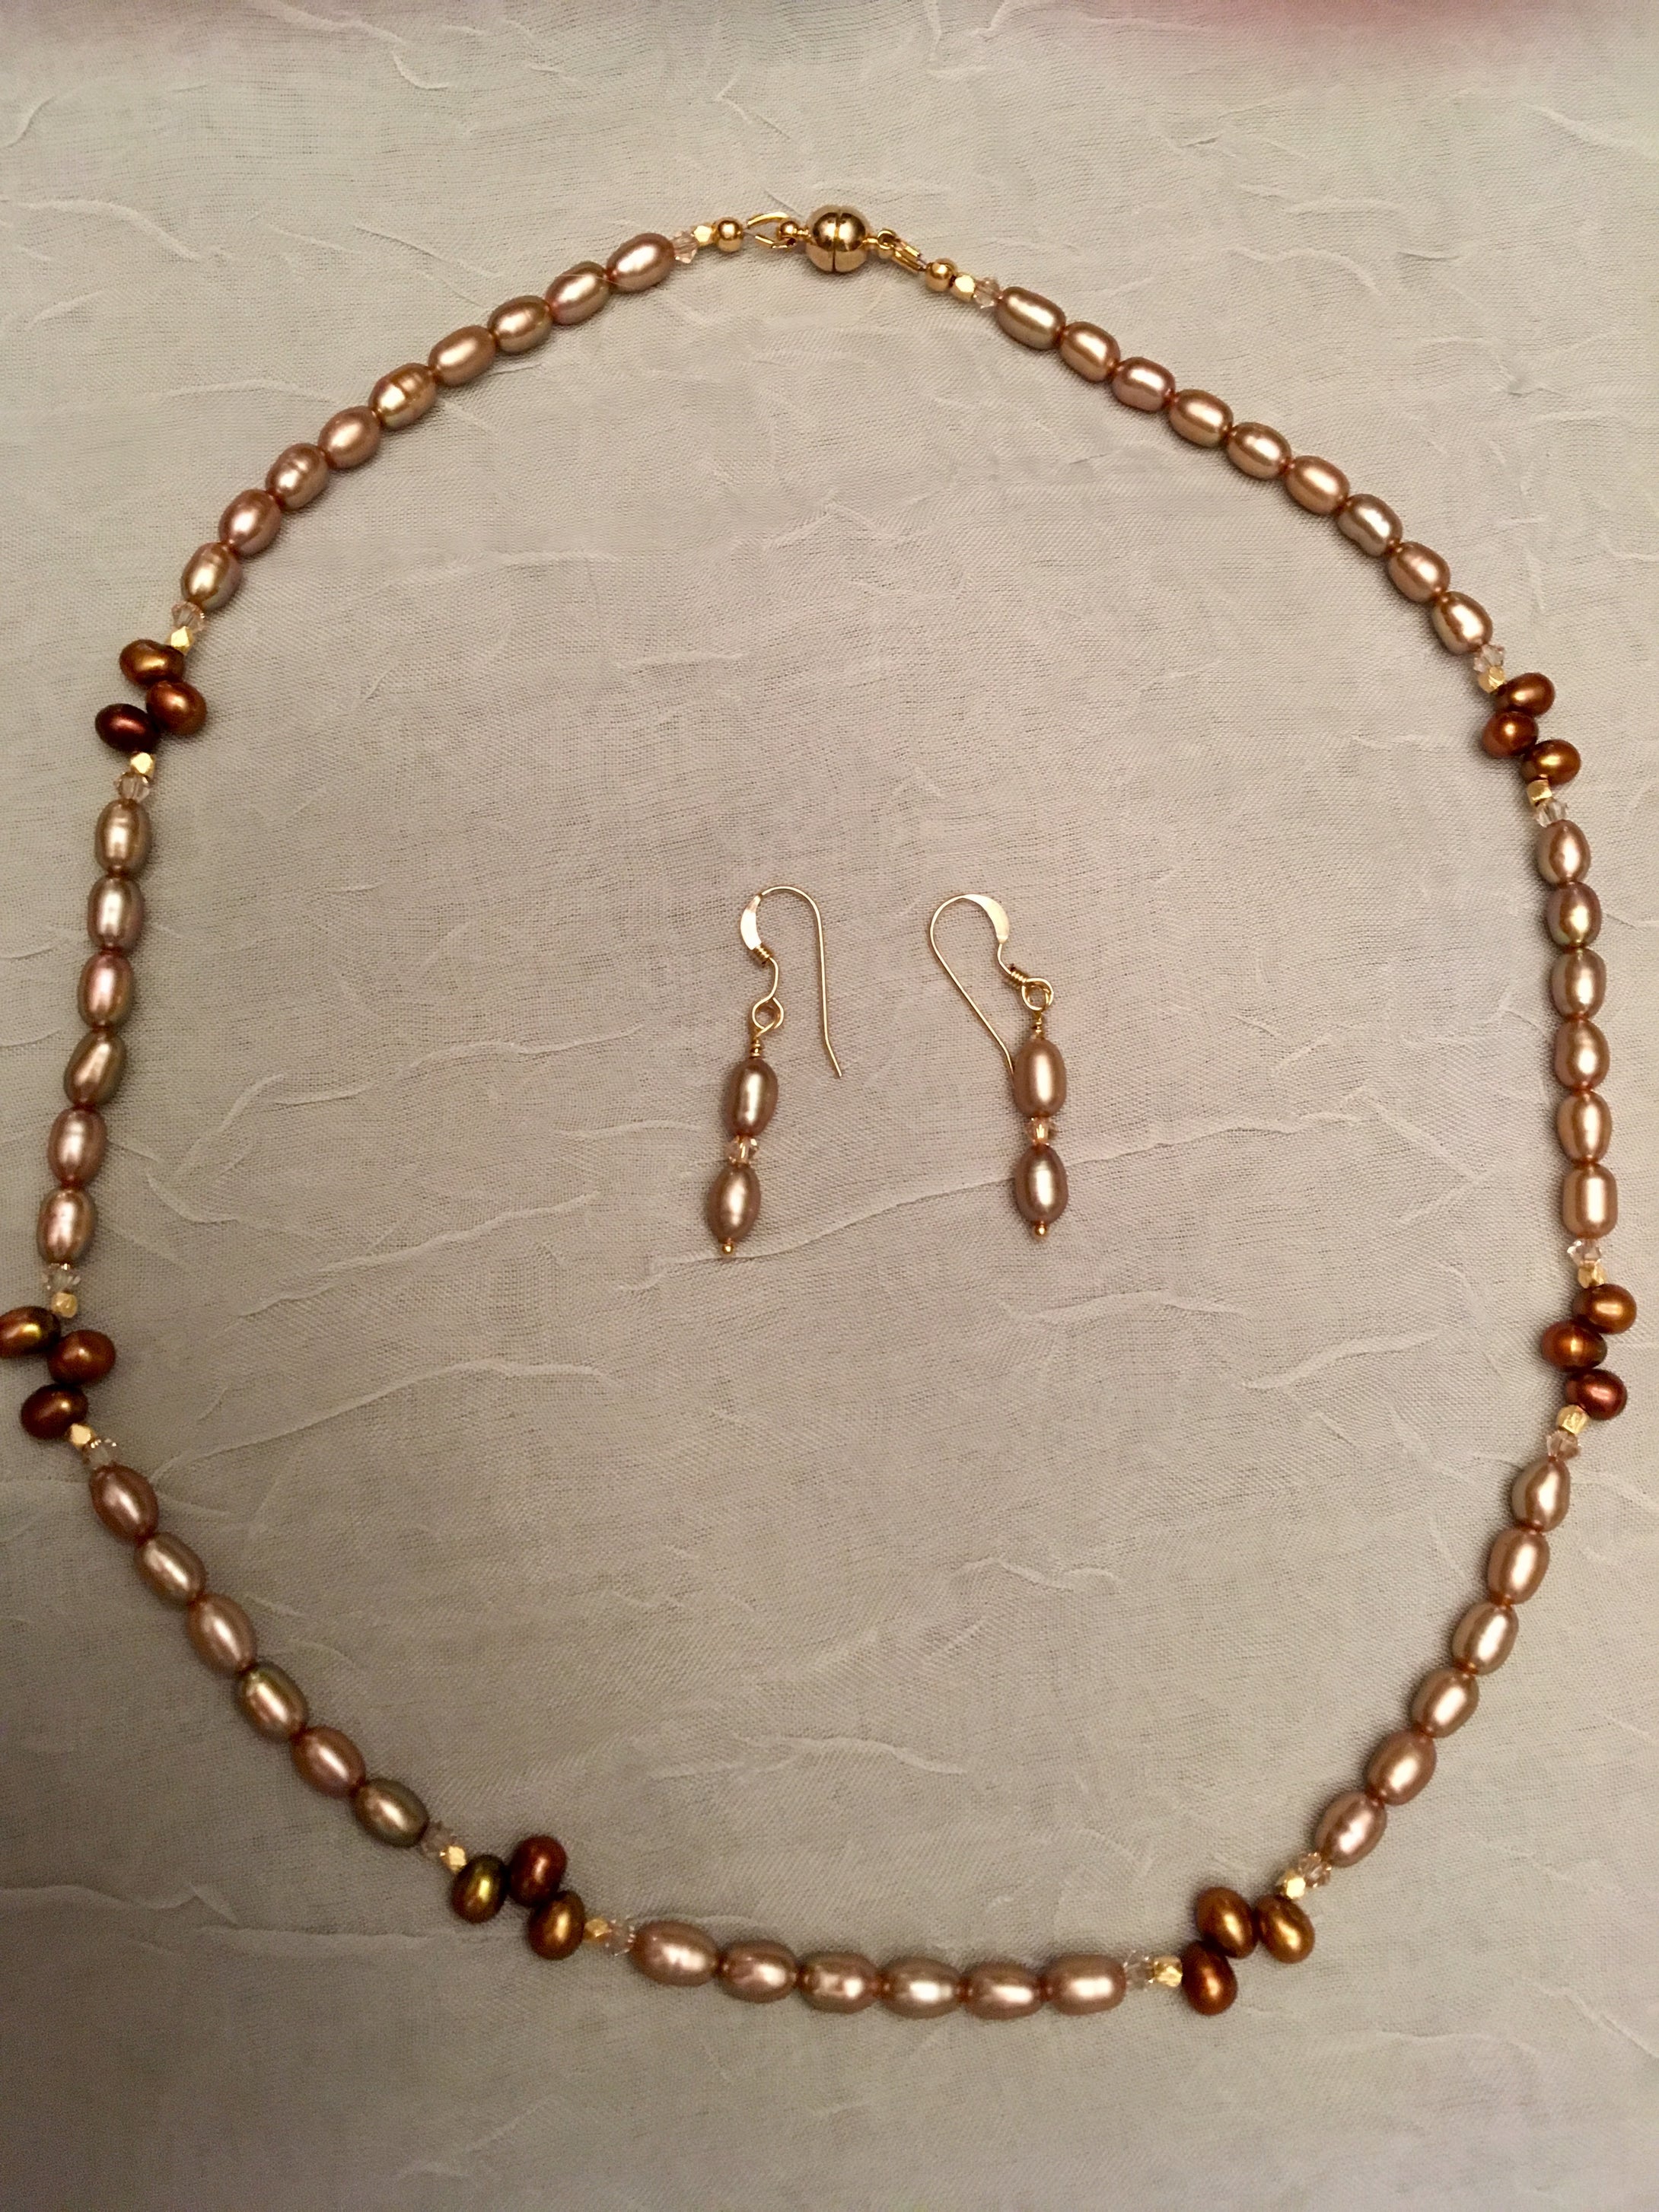 Freshwater Gold Rice Pearls, Bronze Dancing Pearls, Swarovski Crystals.  18